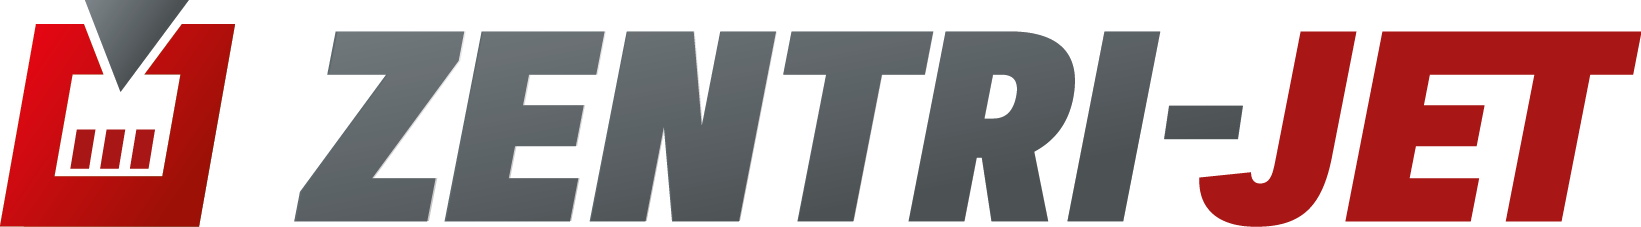 Zentri Jet Logo 4c